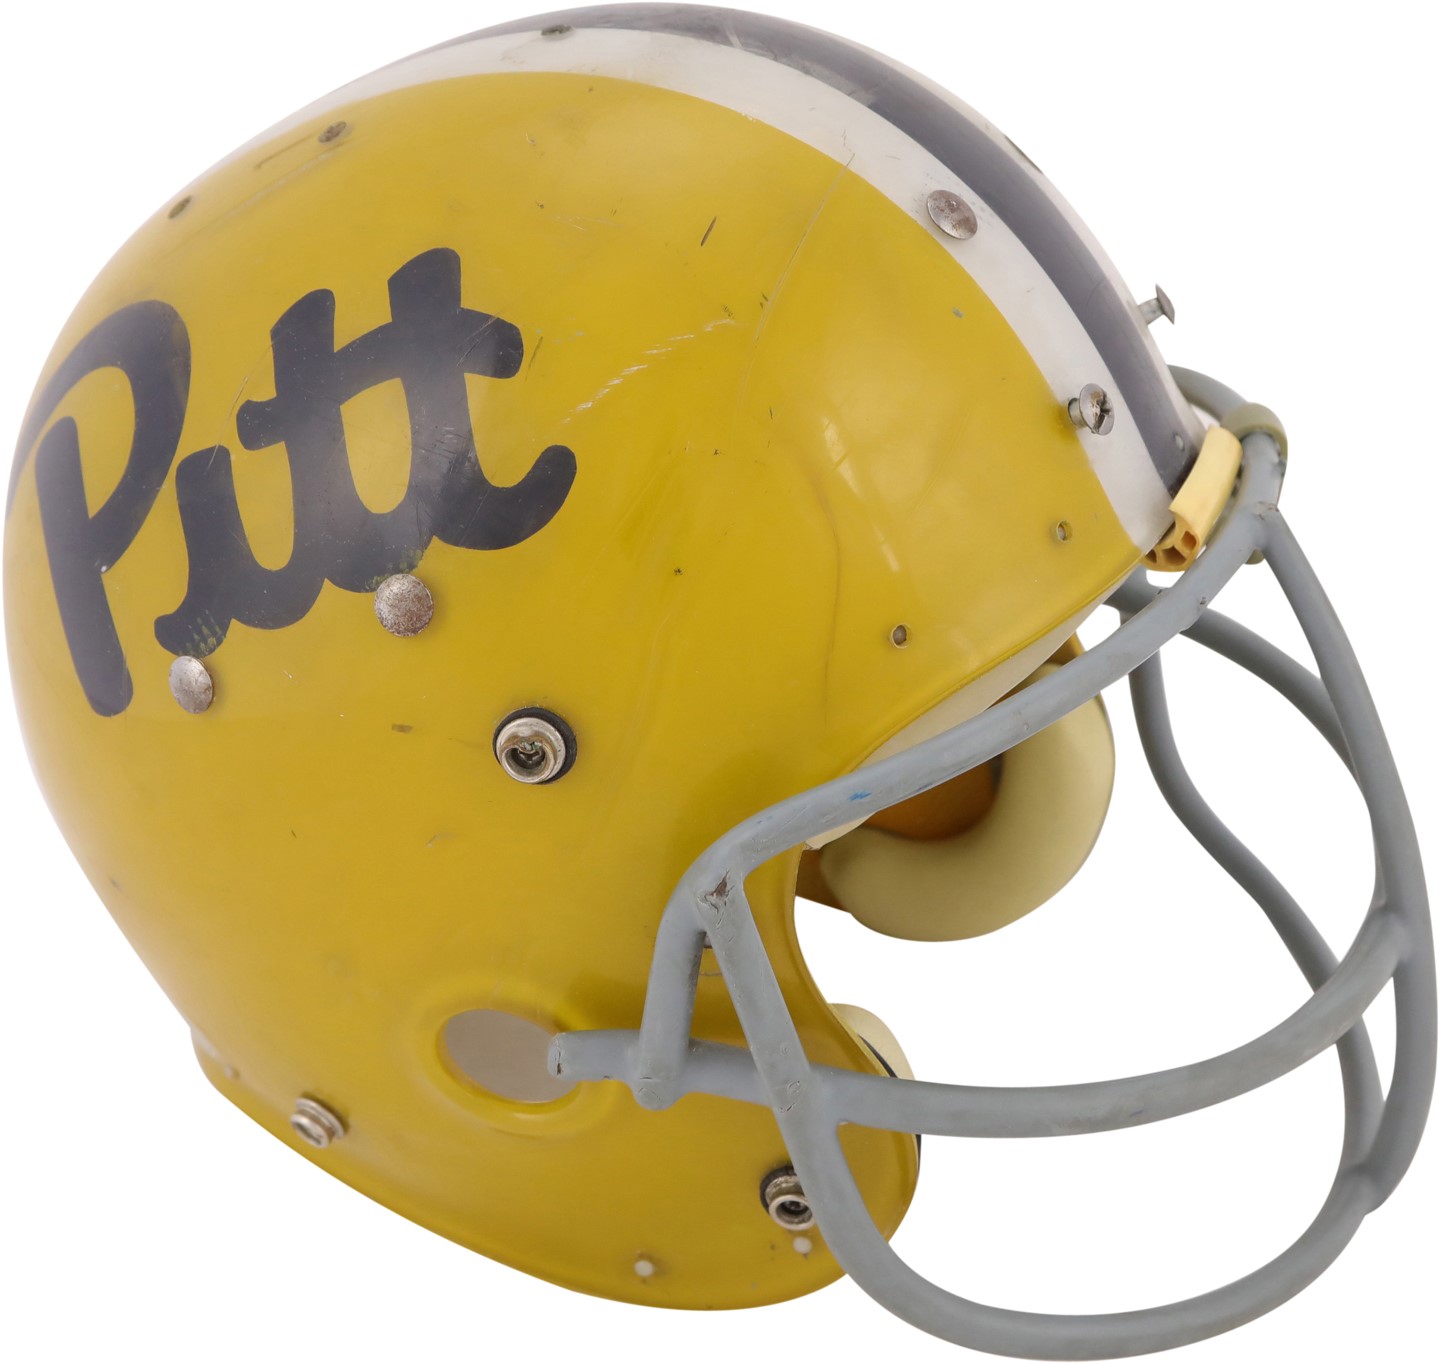 - Circa 1978 University of Pittsburgh Game Used Football Helmet